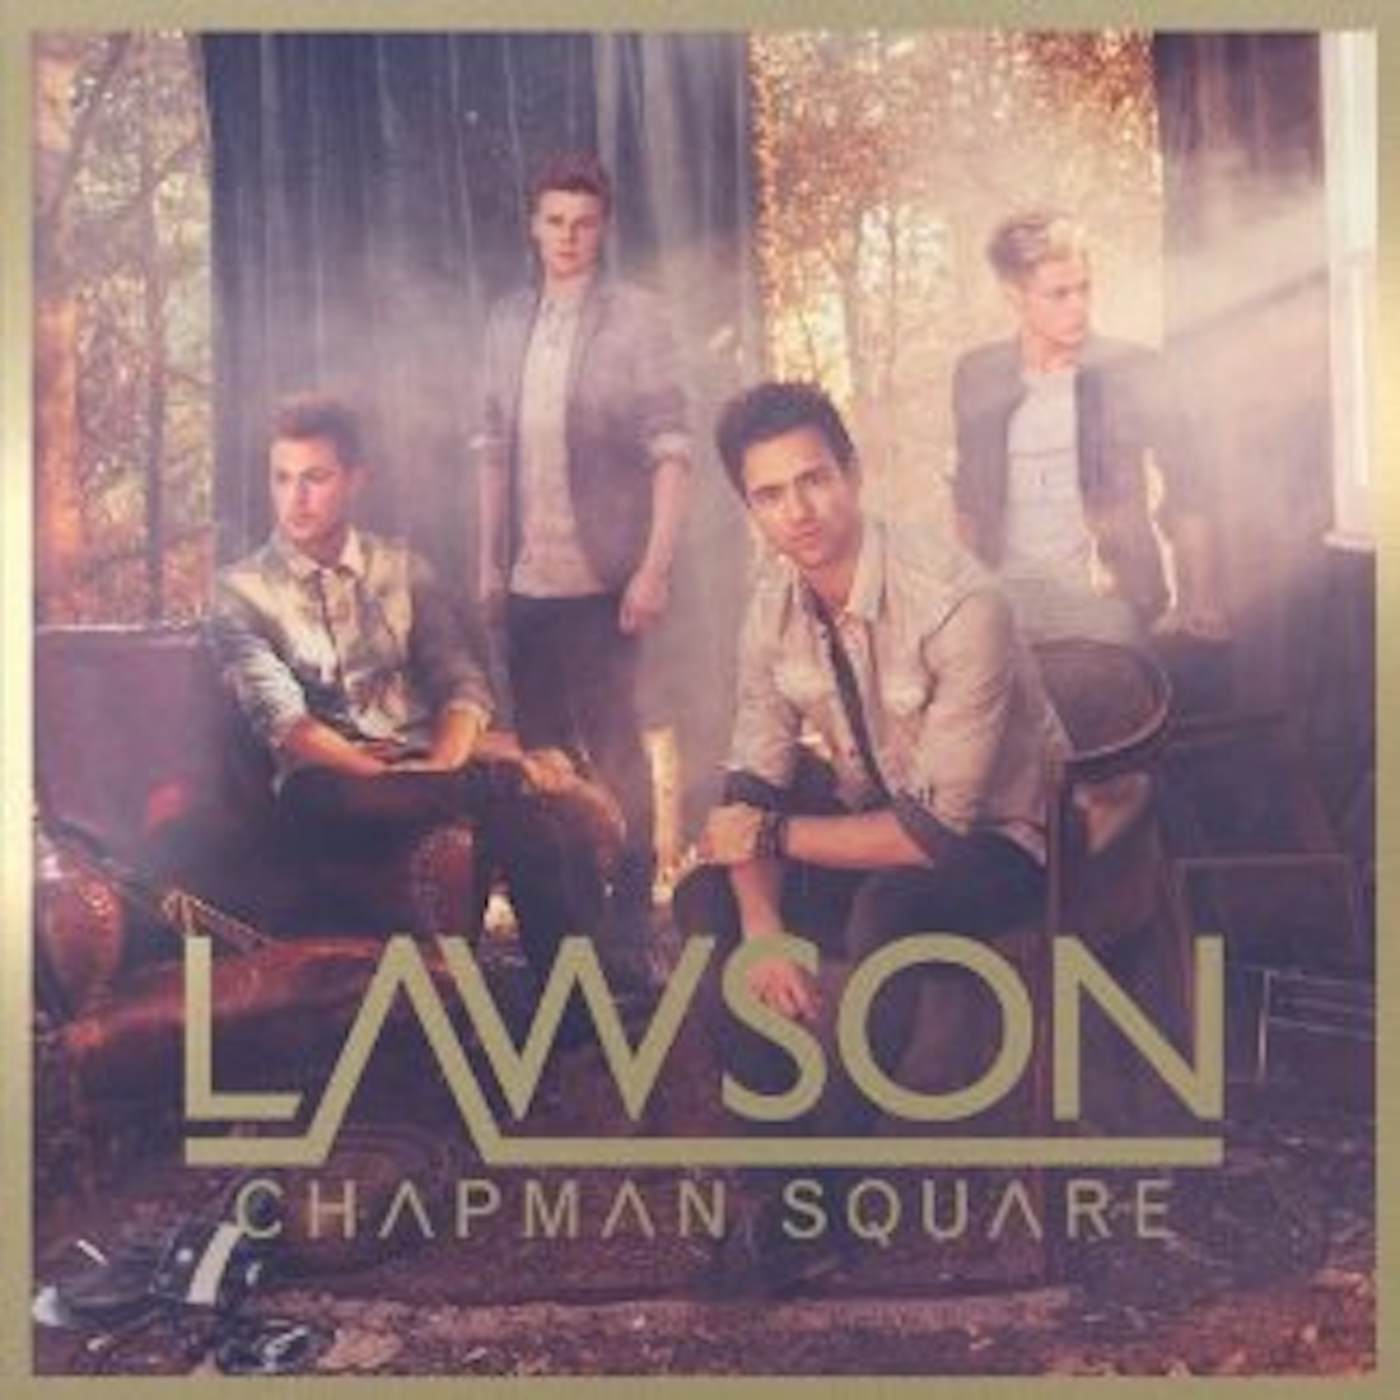 Lawson CHAPMAN SQUARE CD